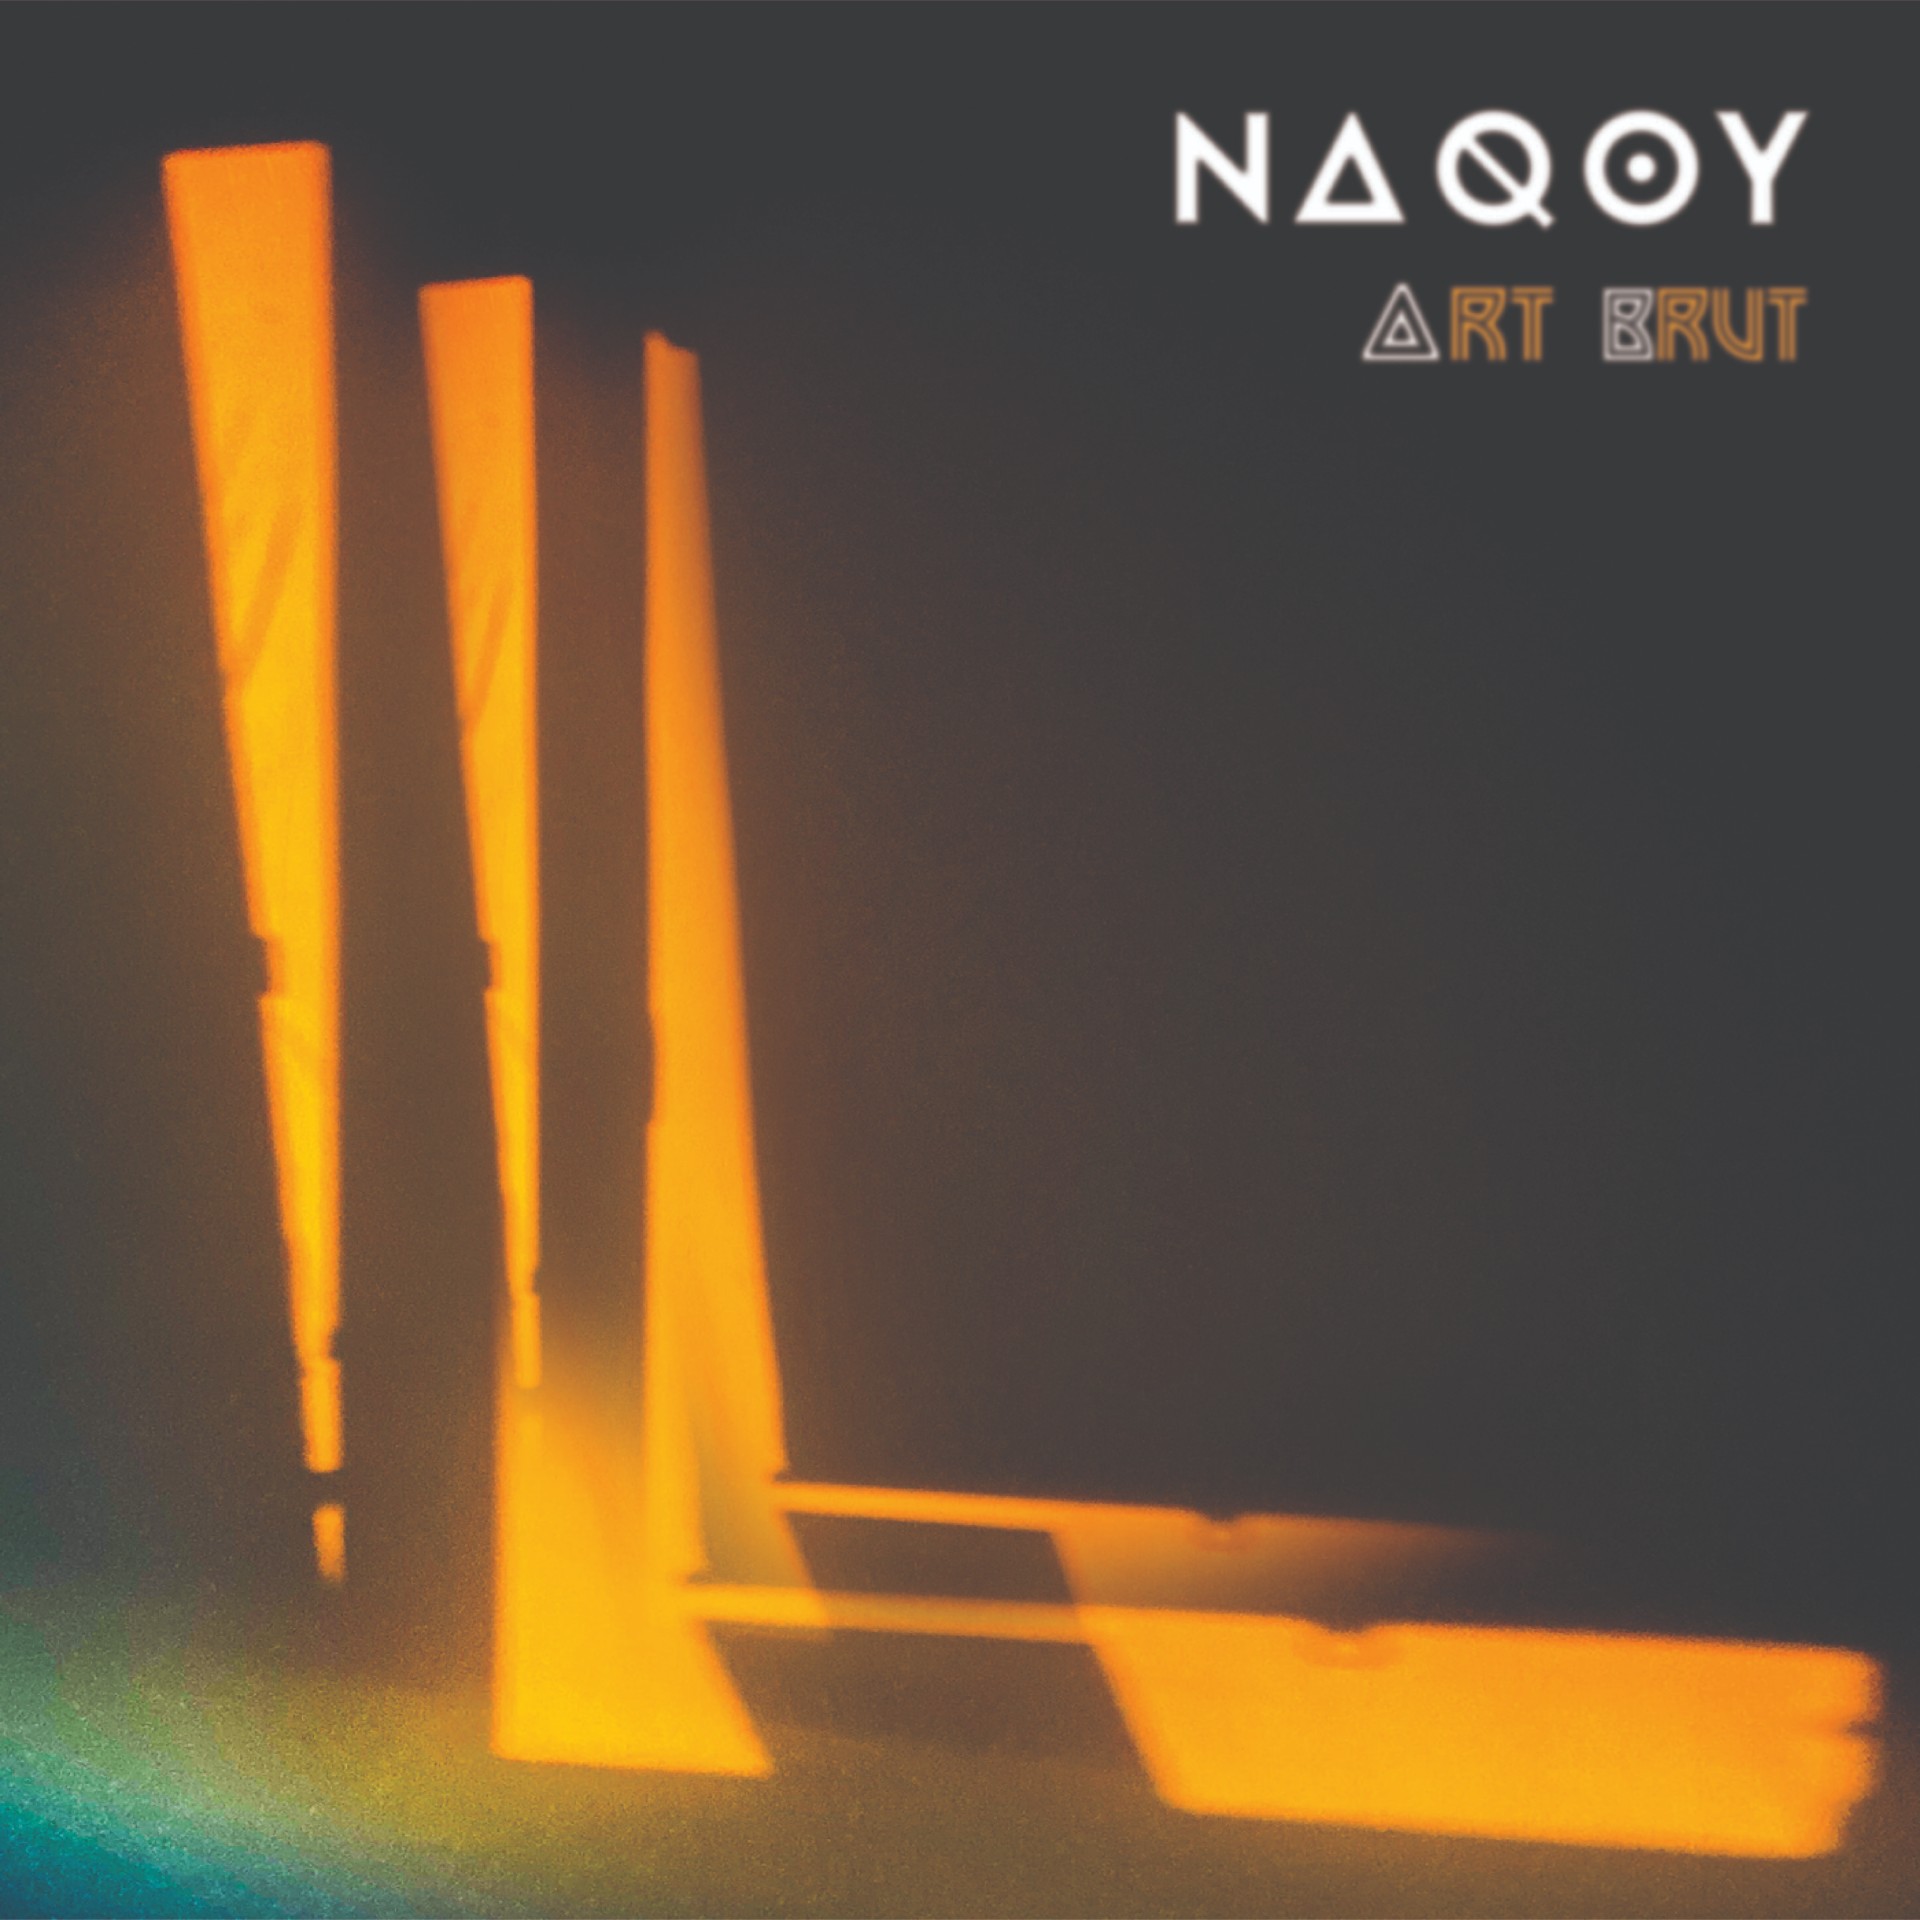 NAQOY ‘Art Brut’ album artwork